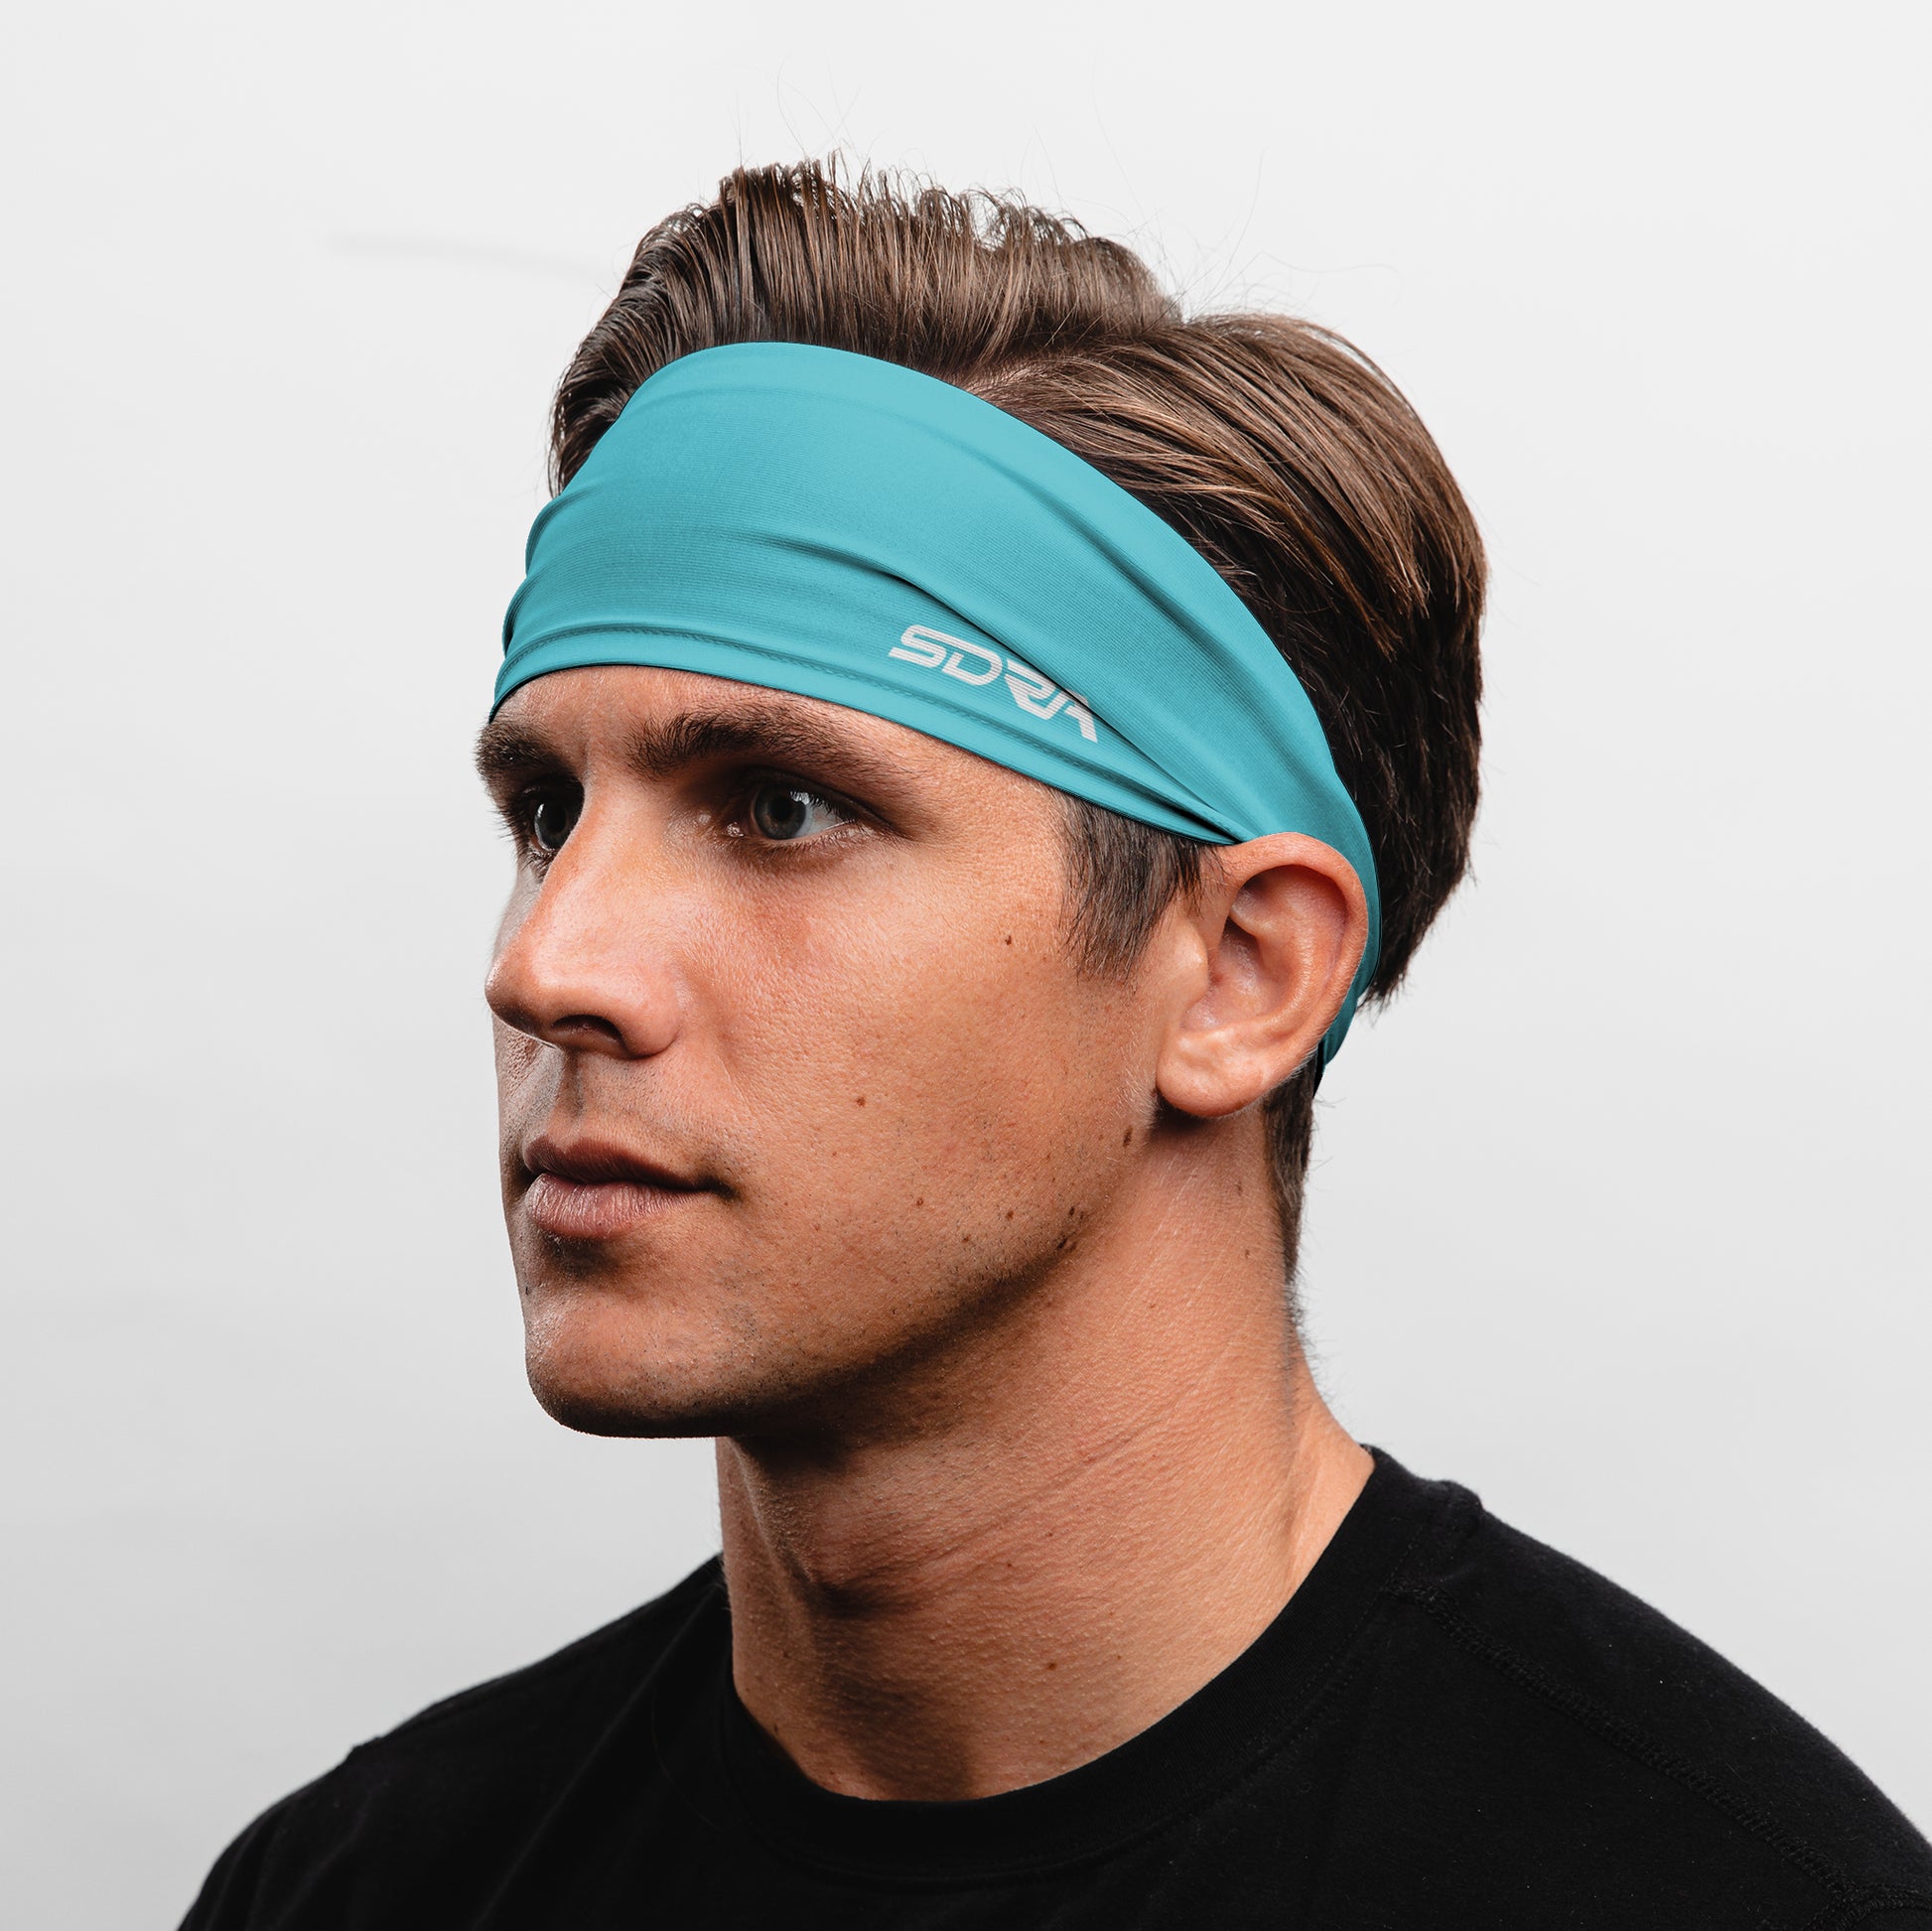 Neon Blue Headband (3.5 Tapered) by Suddora –